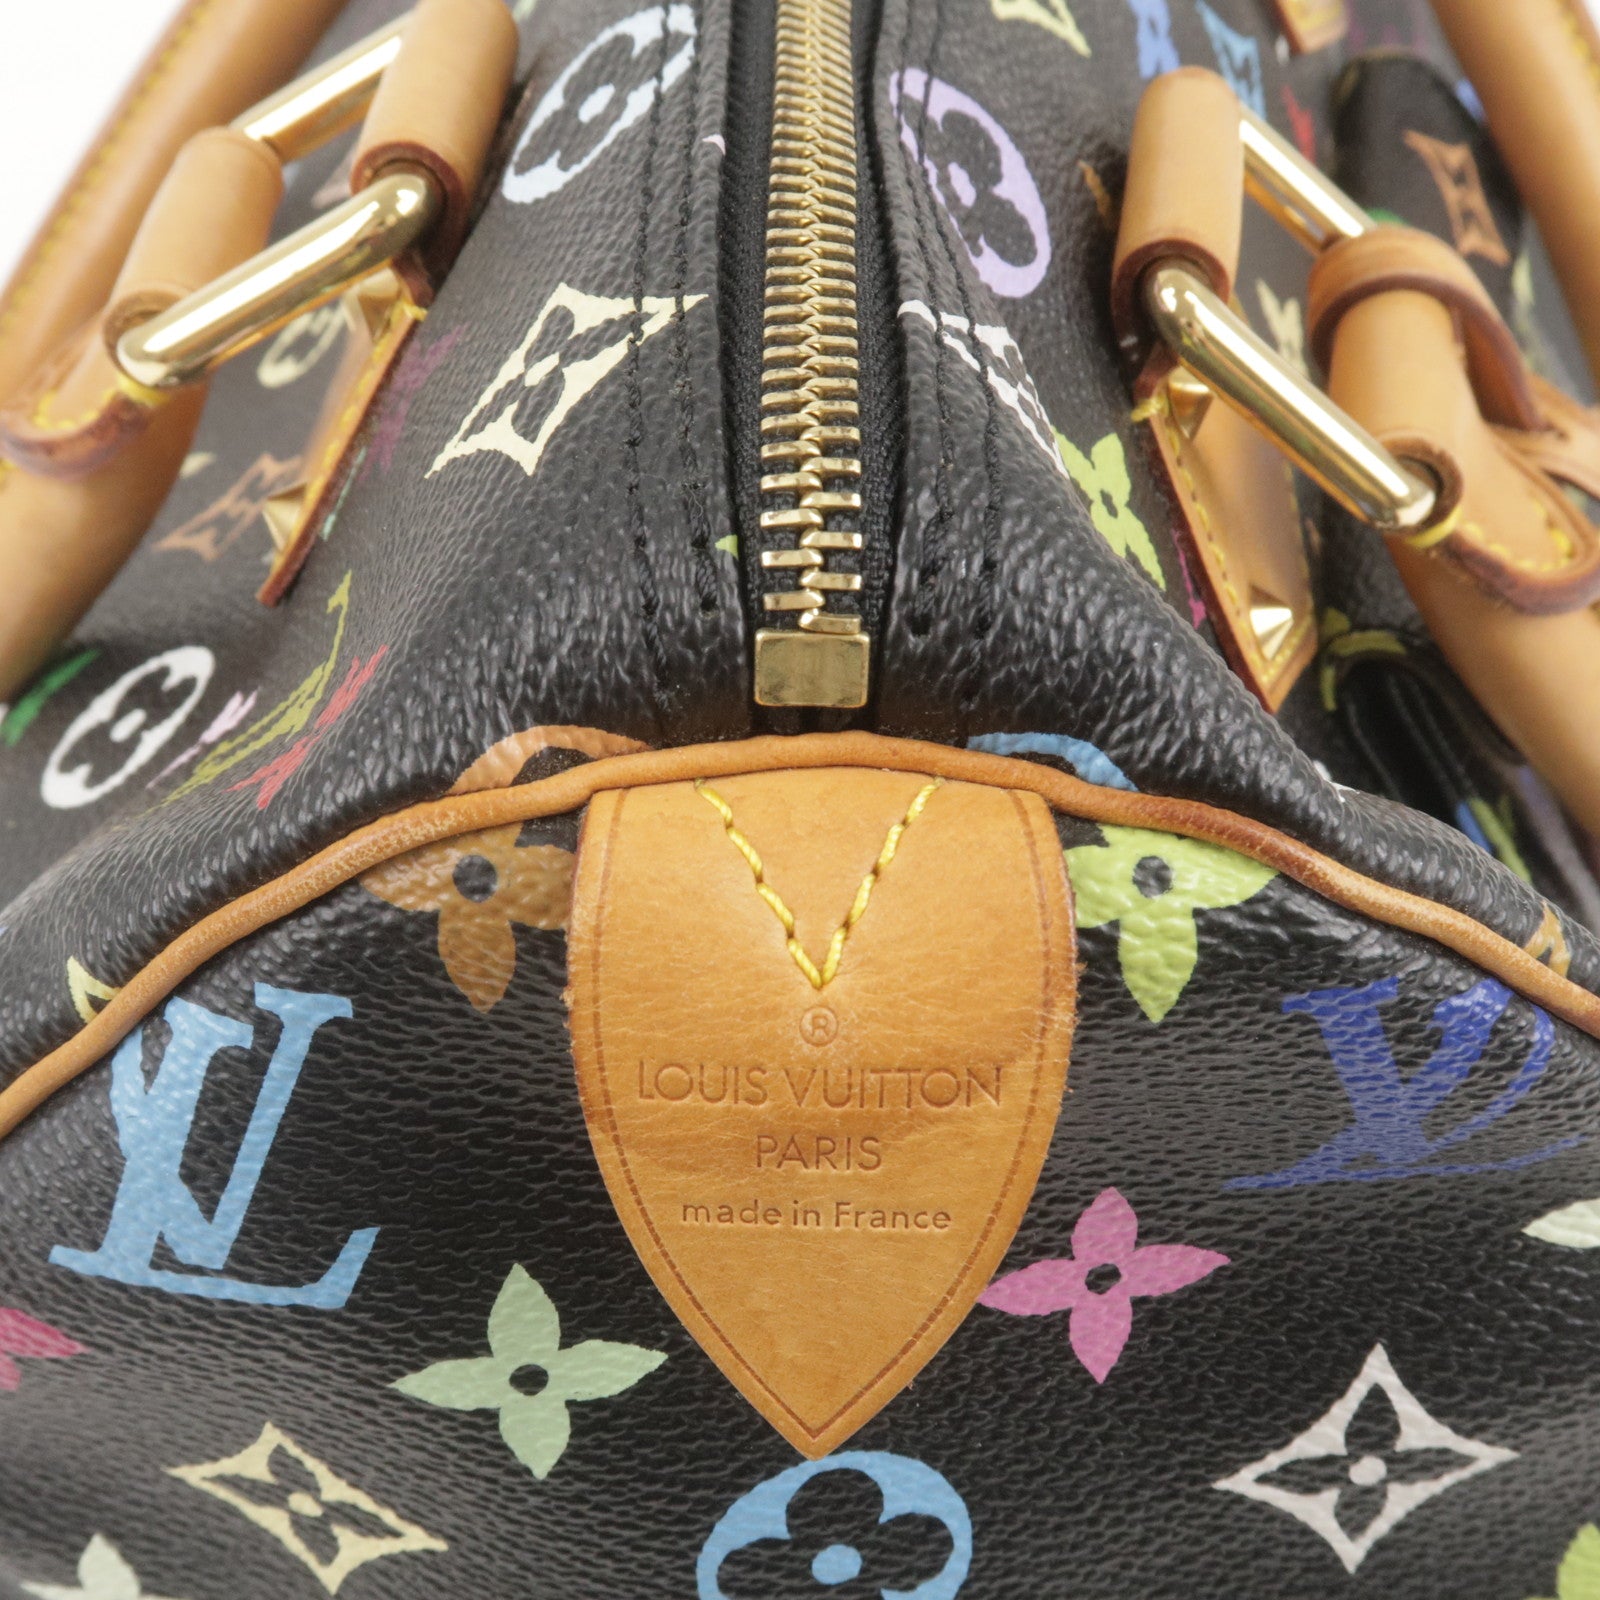 Louis Vuitton Monogram Speedy 30 Hand Bag